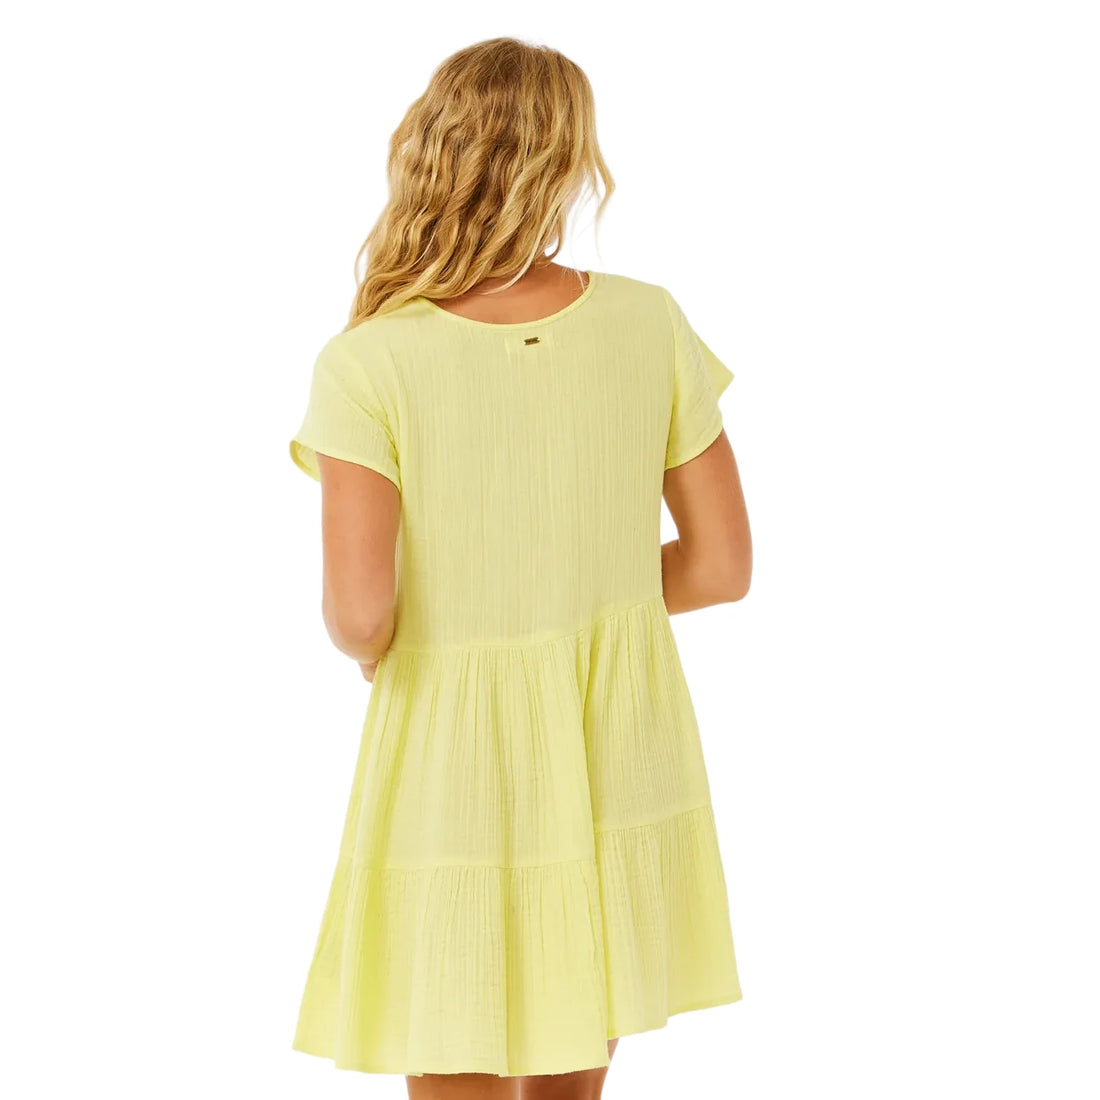 Rip Curl Premium Surf Dress Bright Yellow